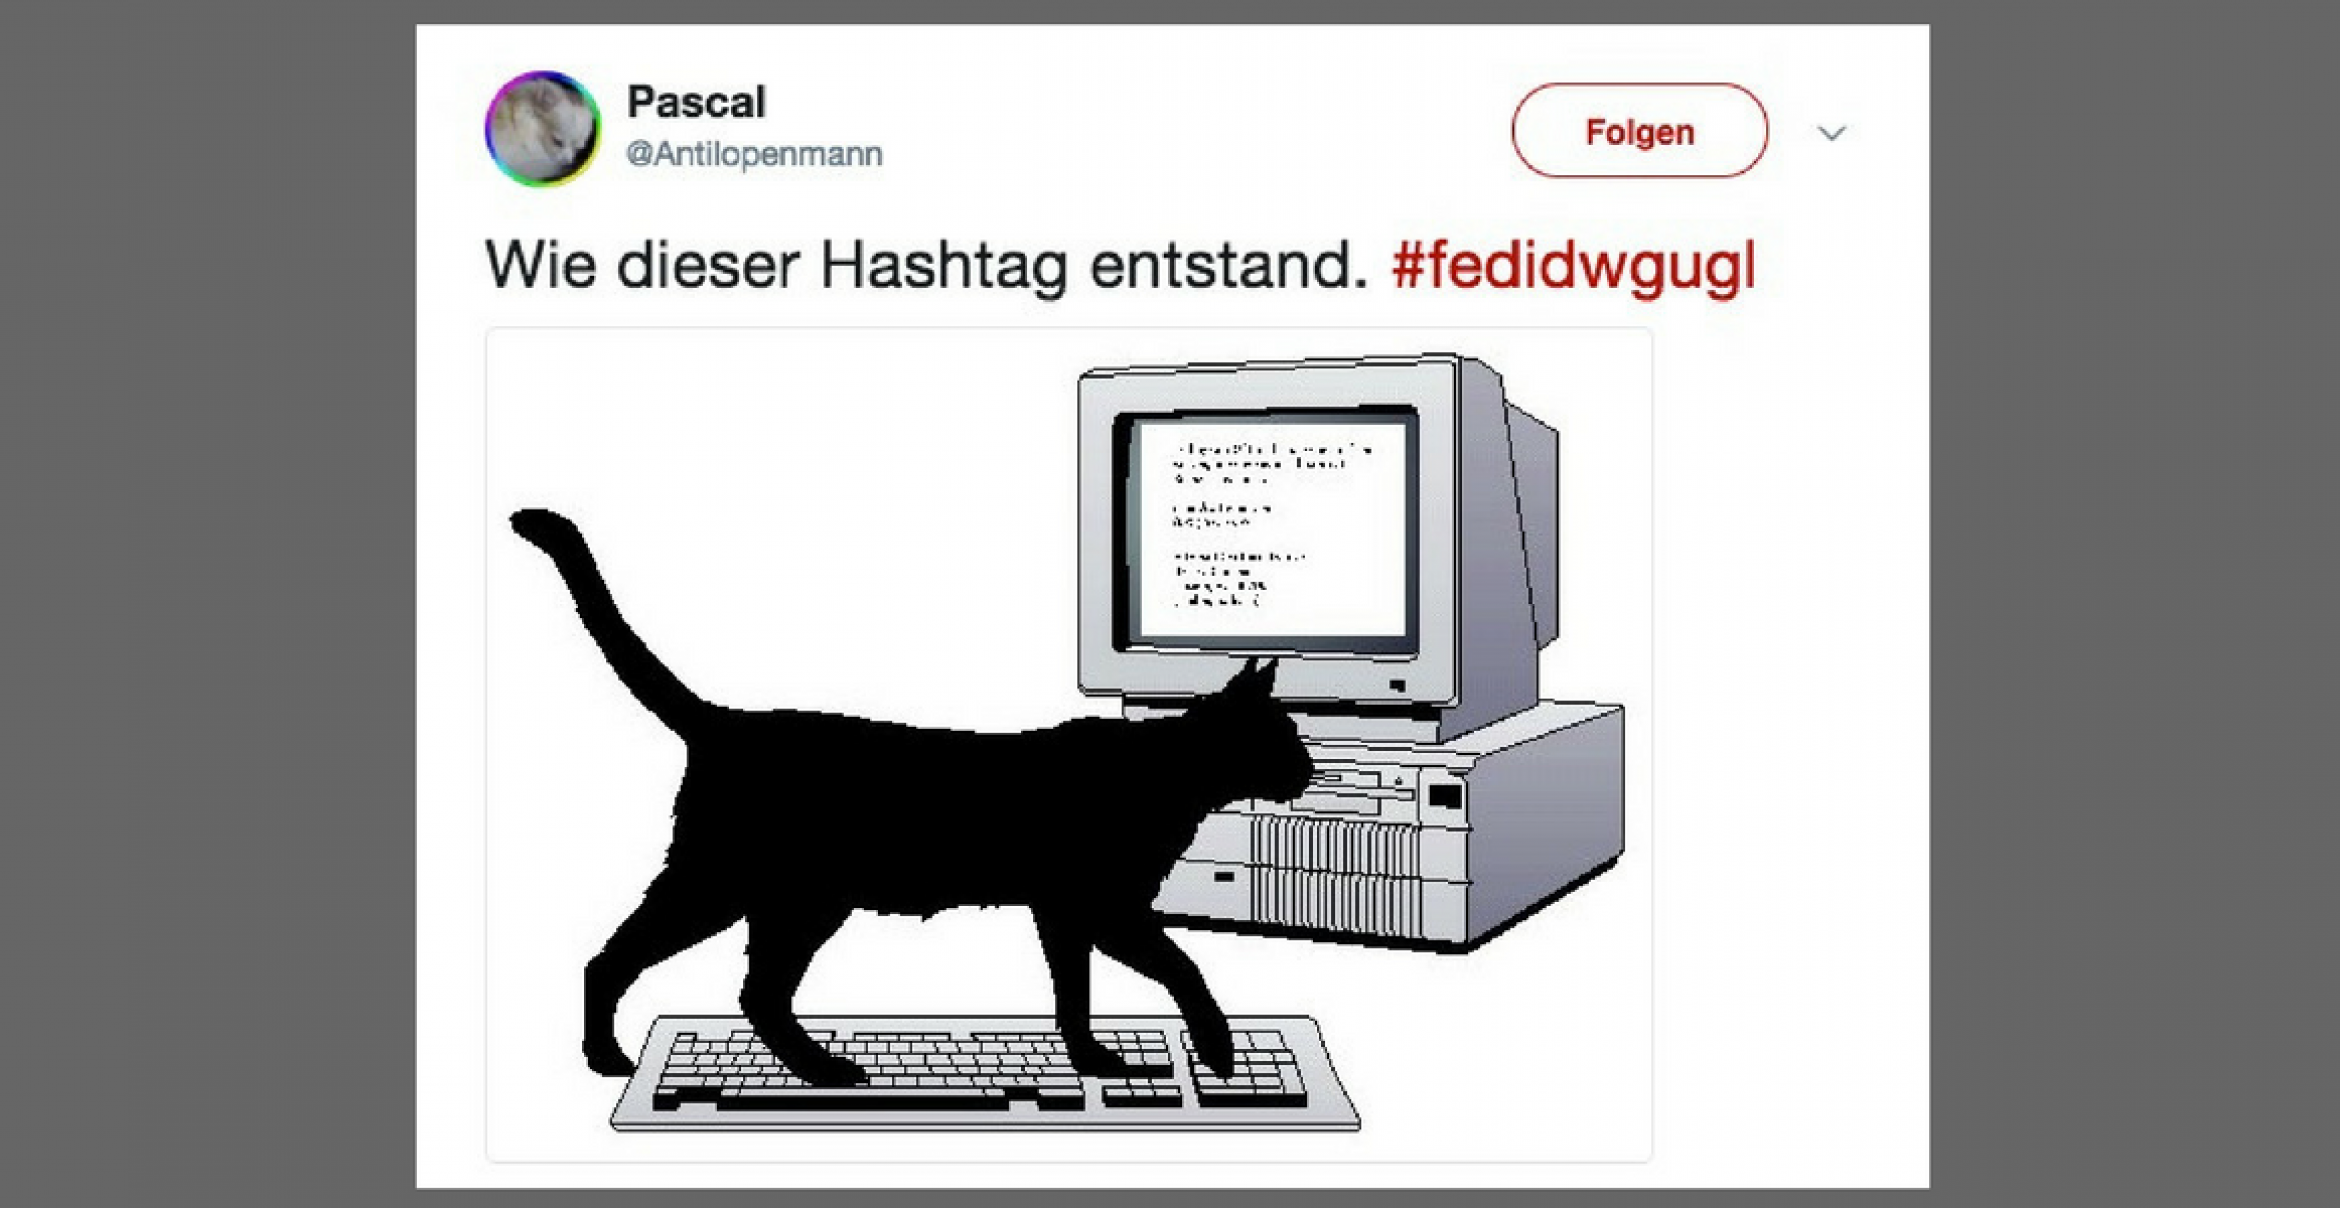 “#fedidwgugl ist das neue #covfefe” – CDU und die Hashtag-Blamage des Jahres